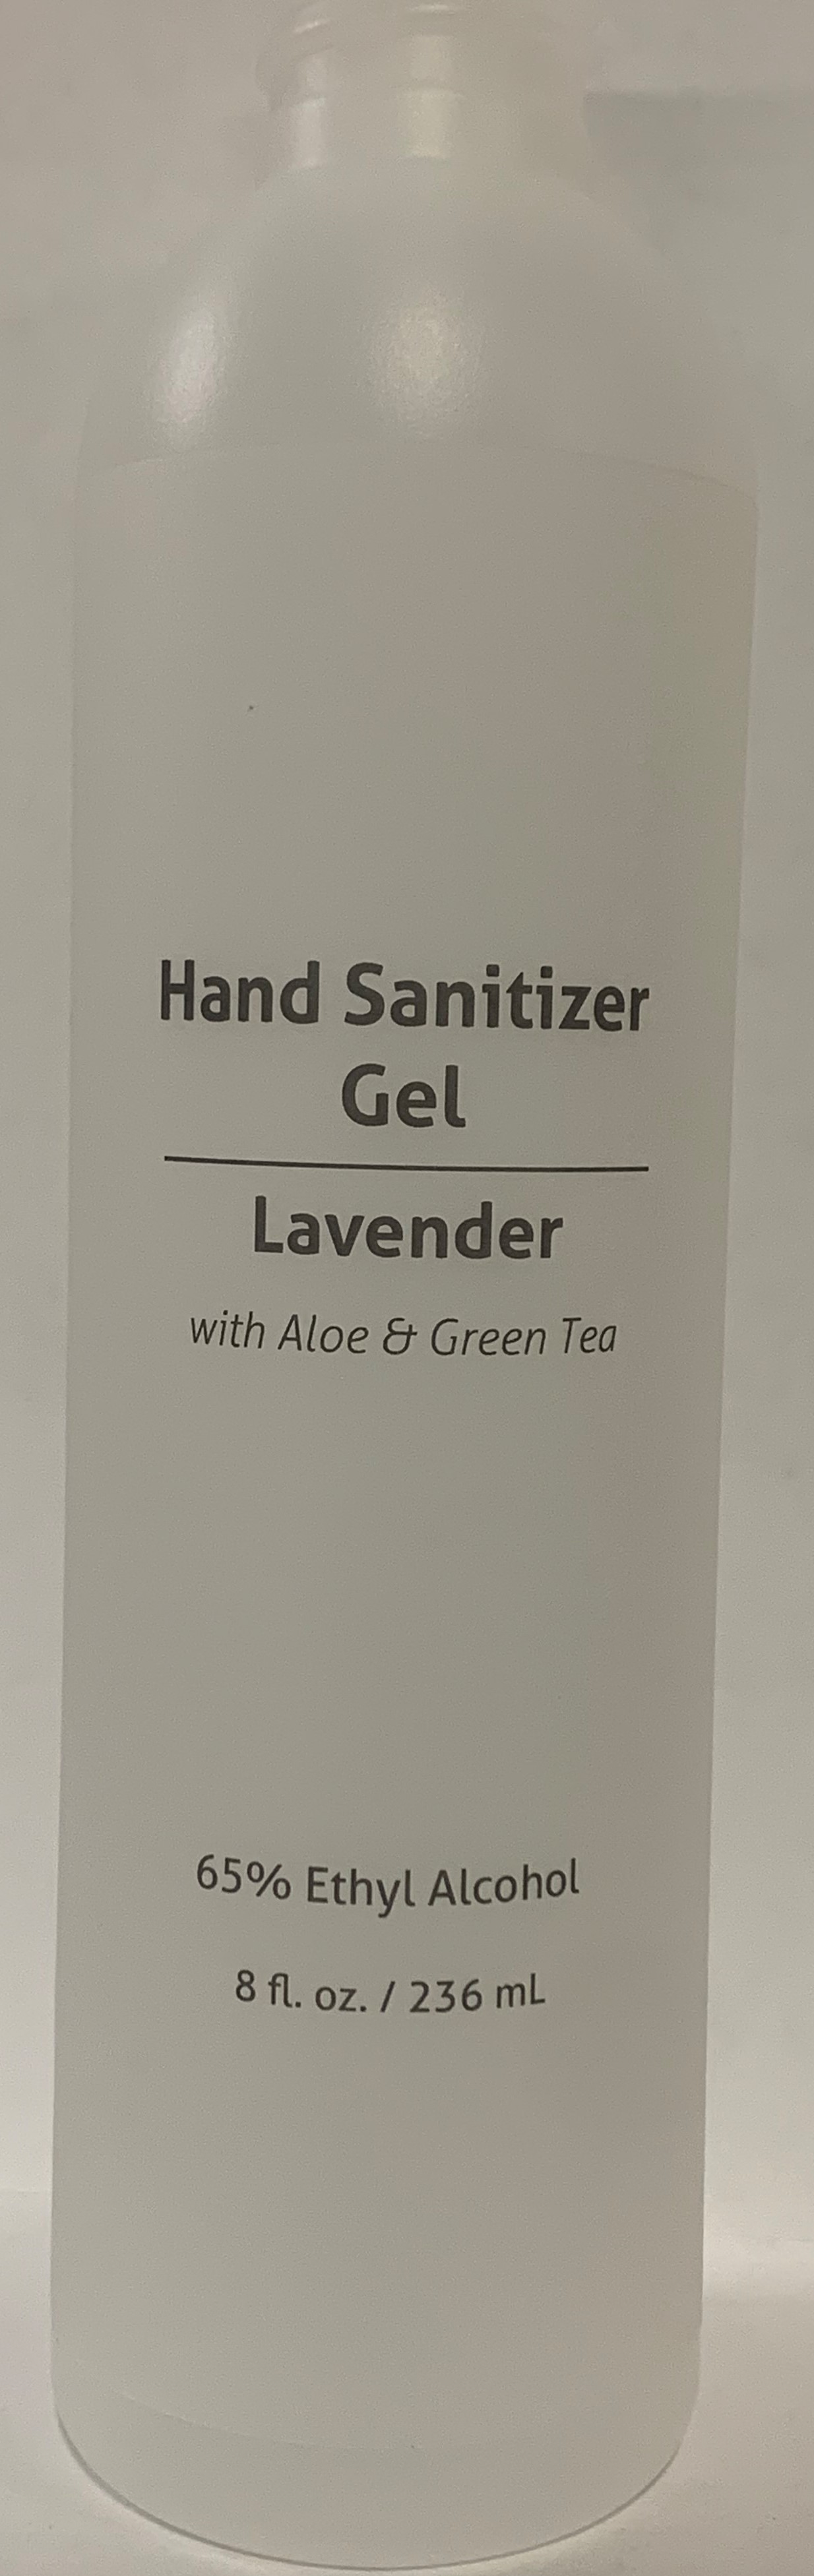 Hand Sanitizer Gel Front